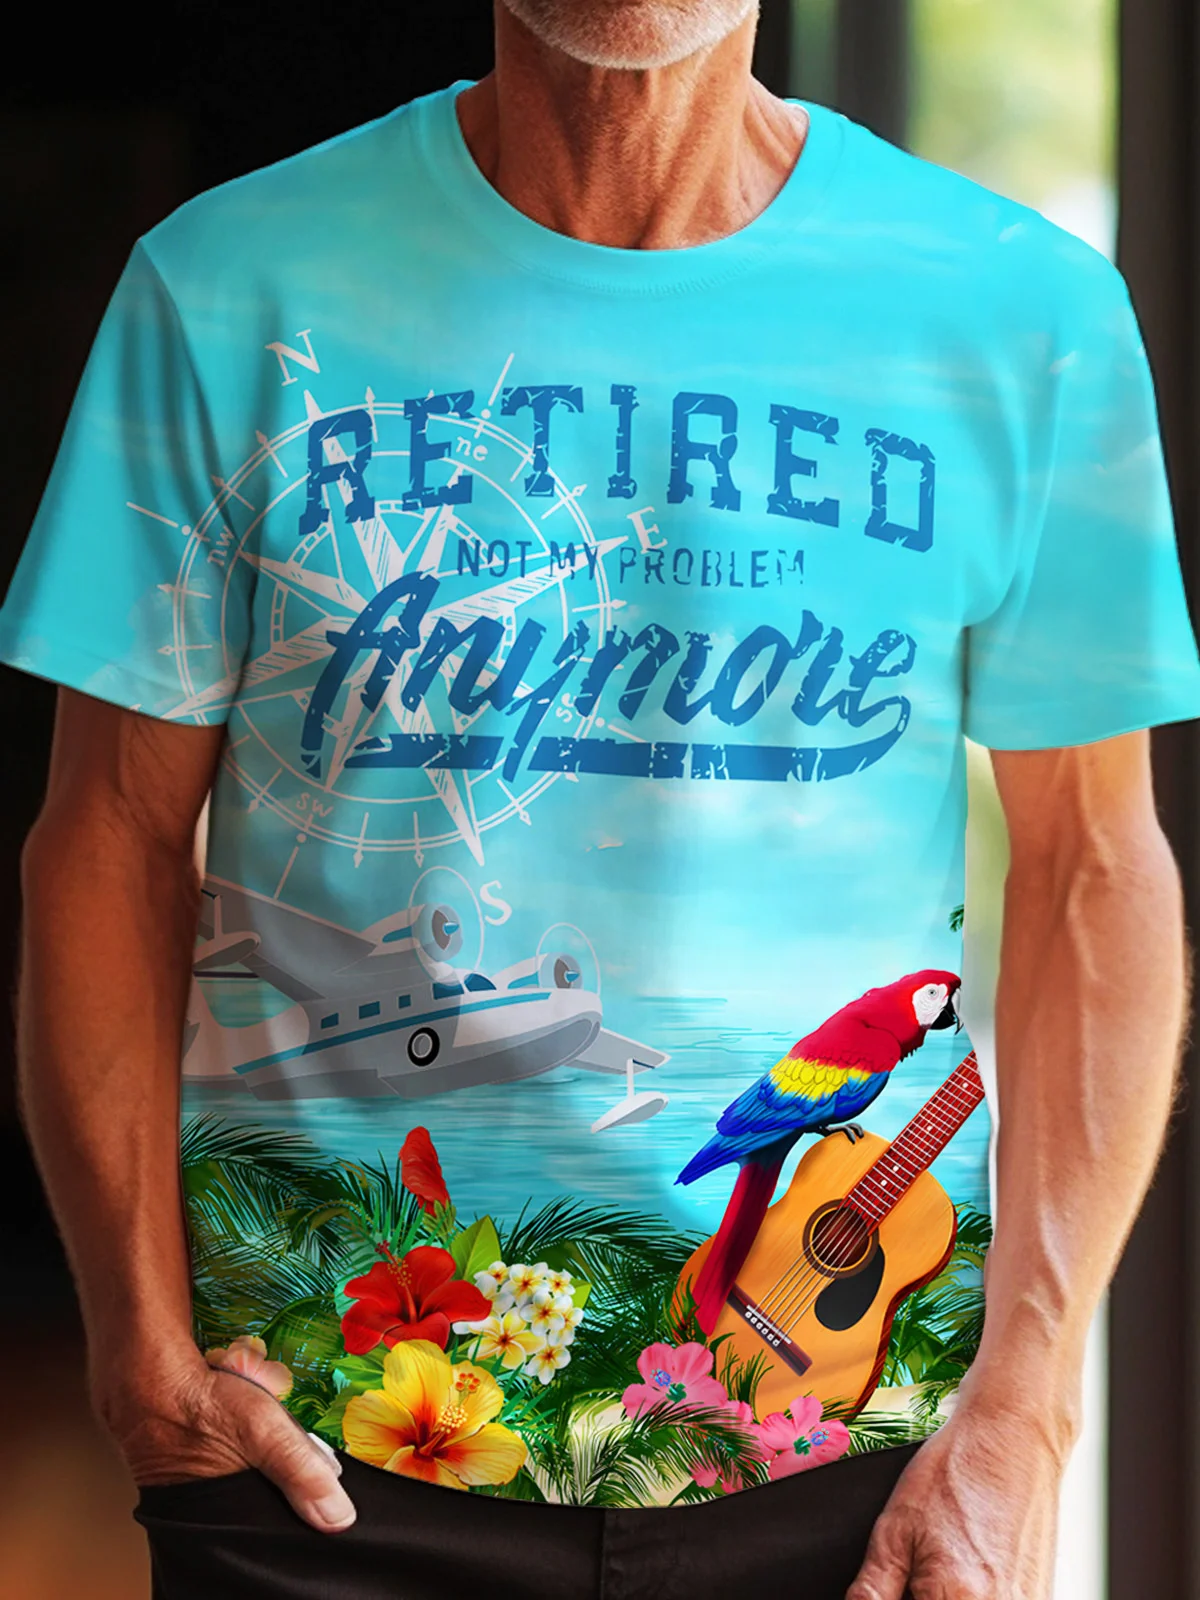 Royaura® Beach Vacation Men's Hawaiian T-Shirt Yacht Parrot Tropical Camping Tops Big Tall